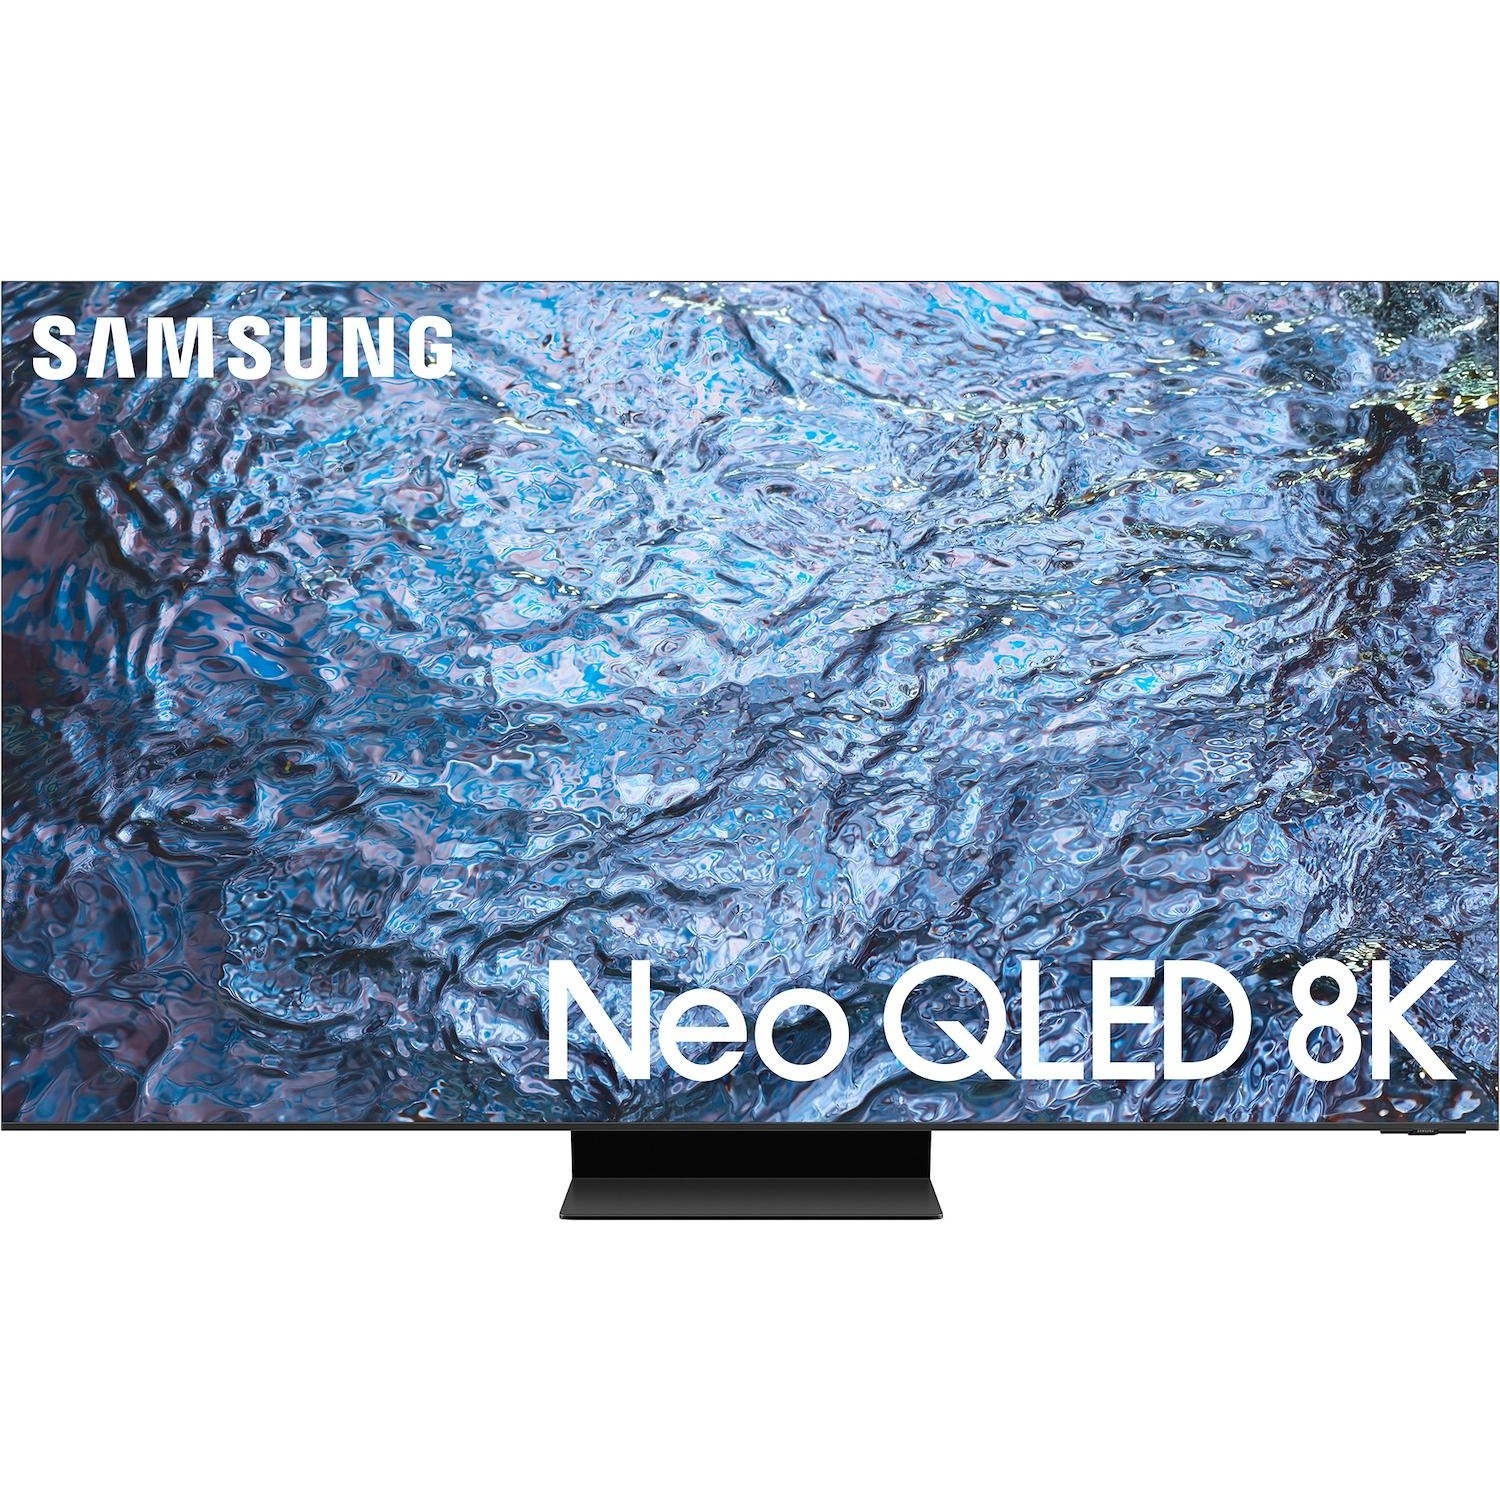 Immagine per TV LED Smart 8K Samsung 75QN900C da DIMOStore